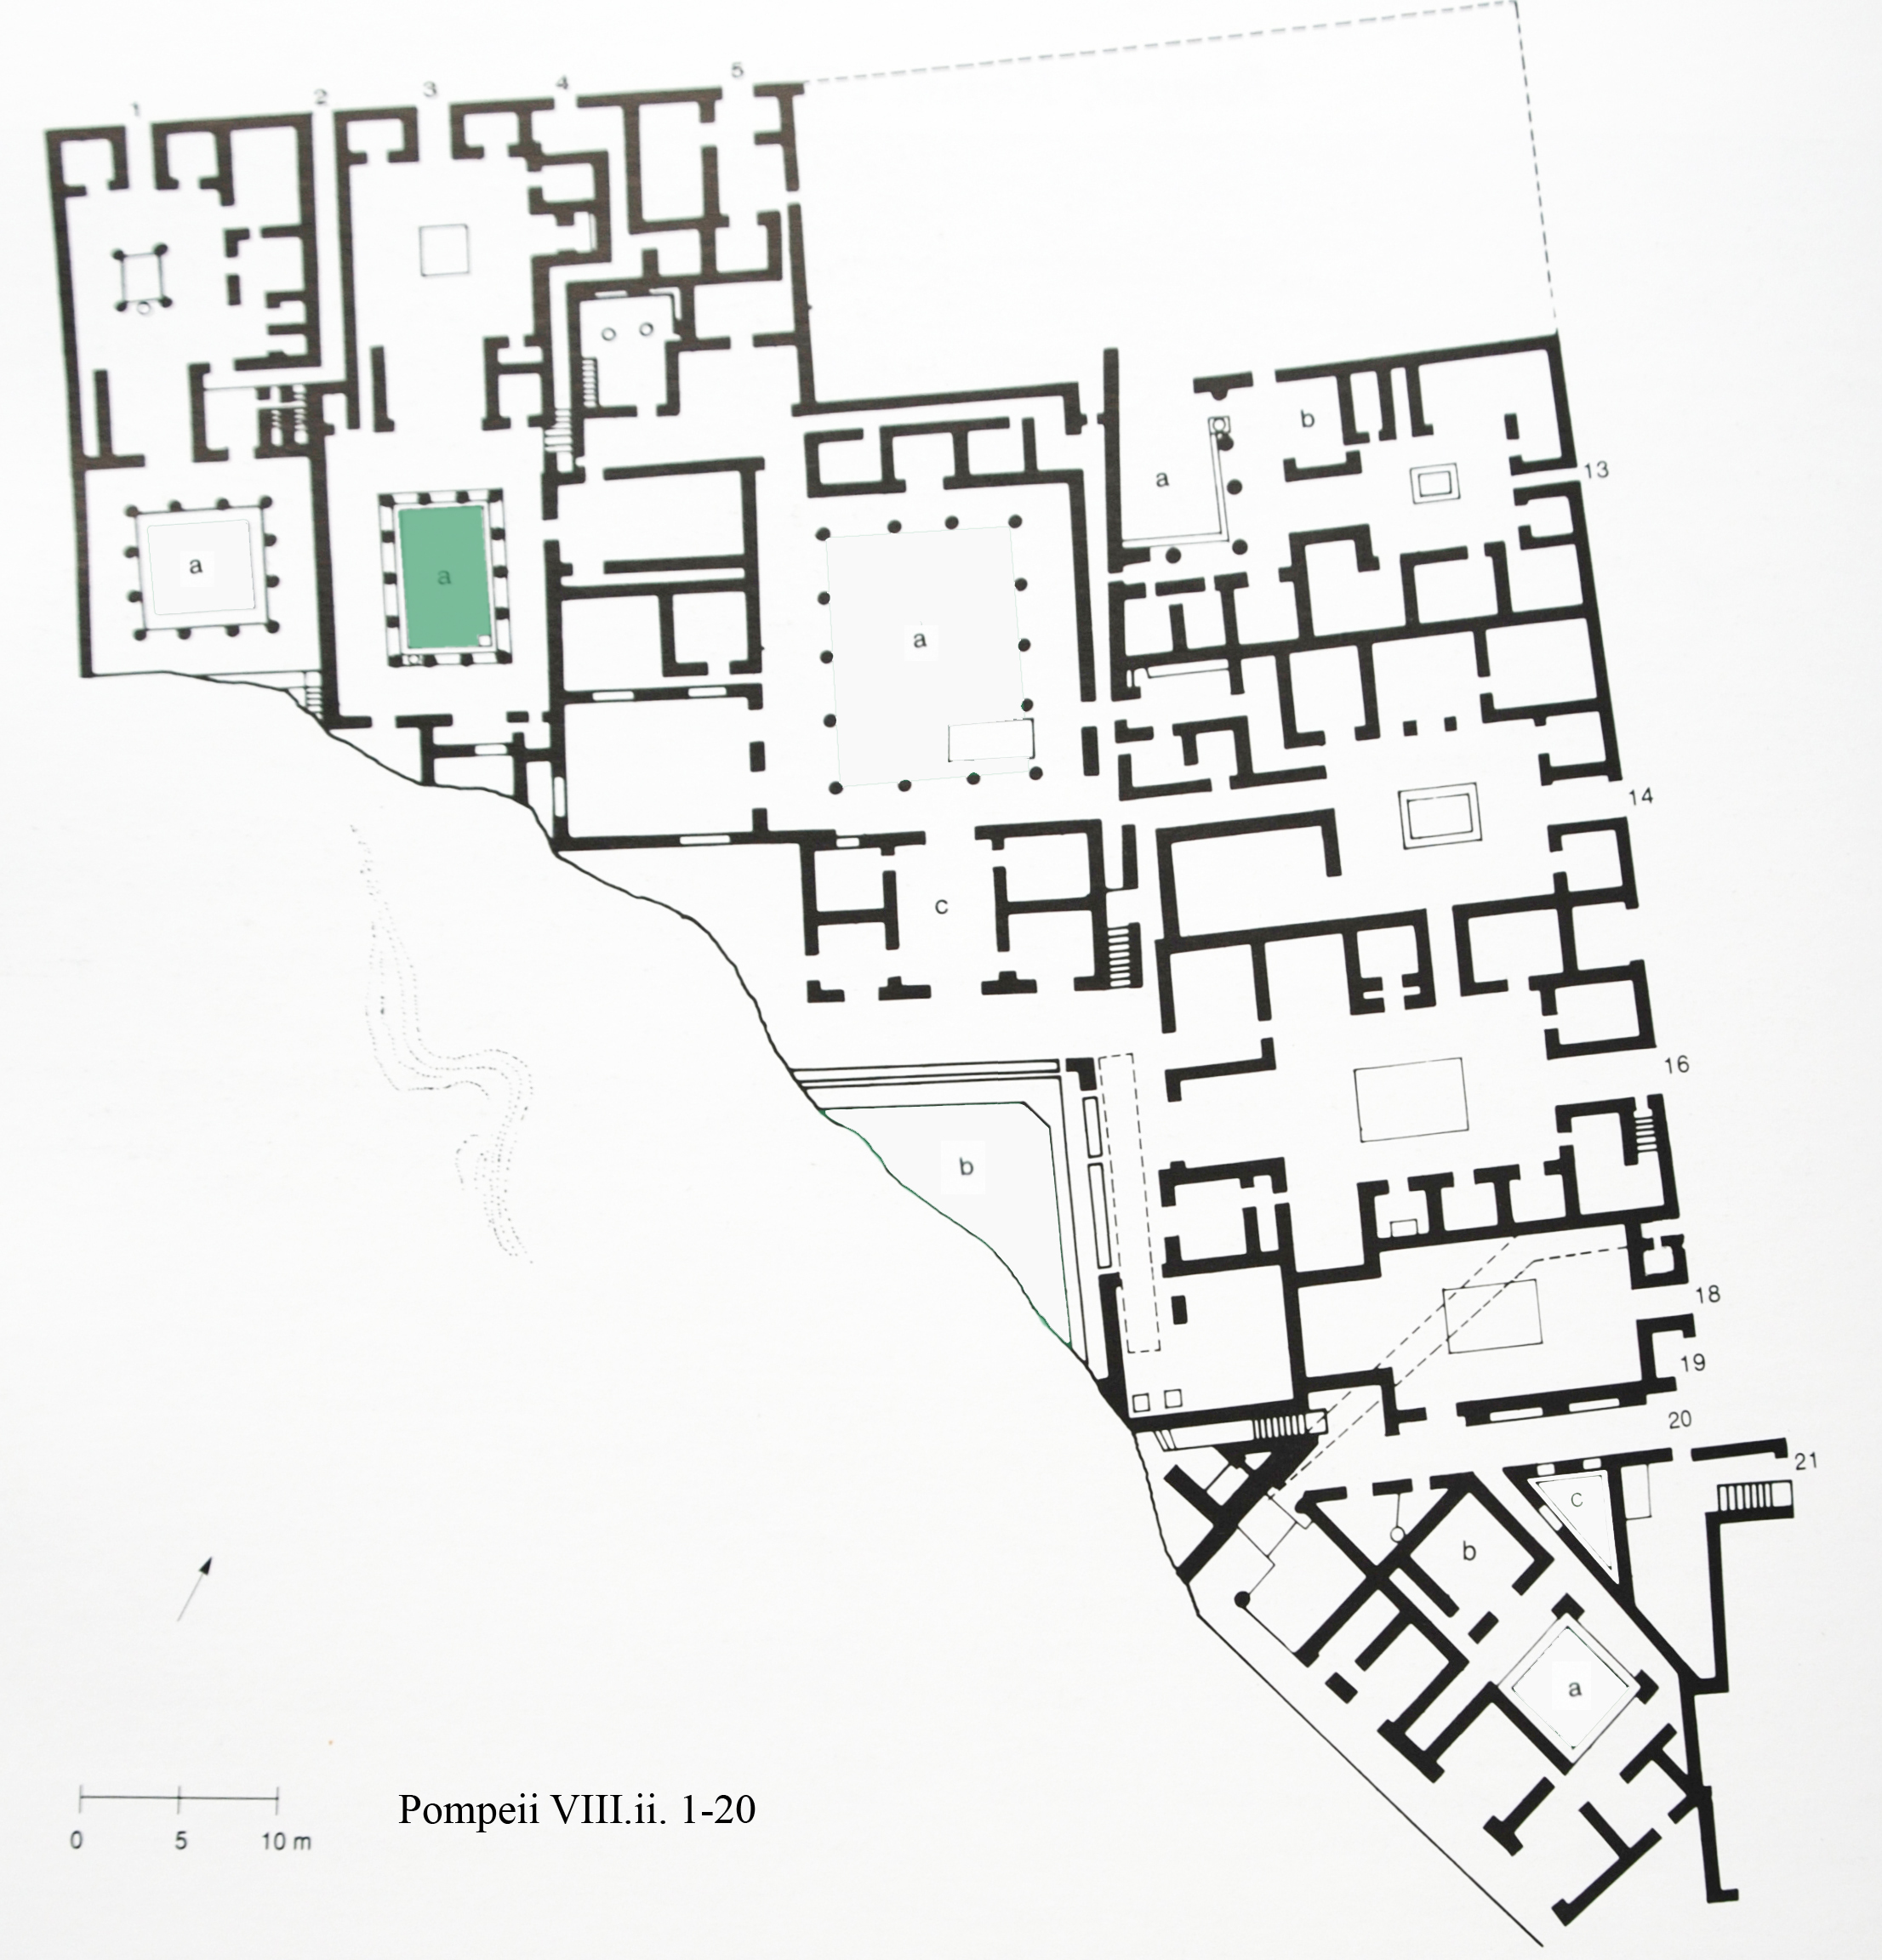 Plan of the Pompeii Region VIII, Insula II, 1-20